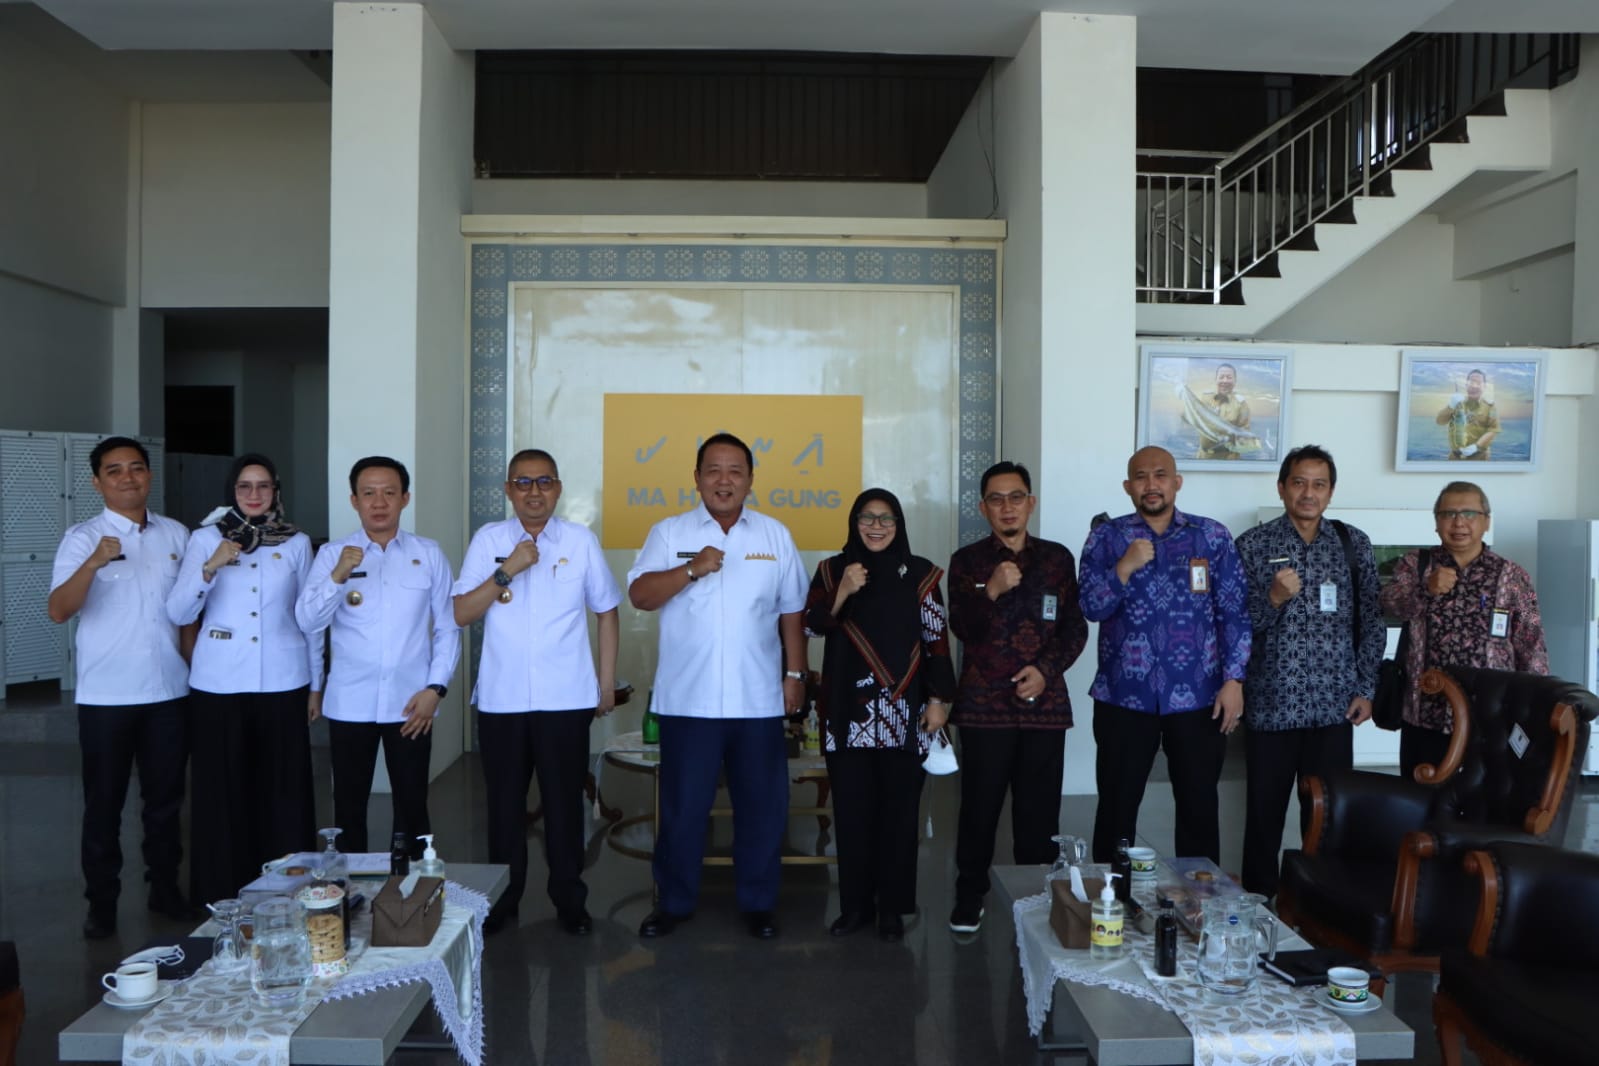 BPK Bersama Gubernur Berupaya Wujudkan Tata Kelola Pemerintahan Bersih, Berwibawa dan Profesional